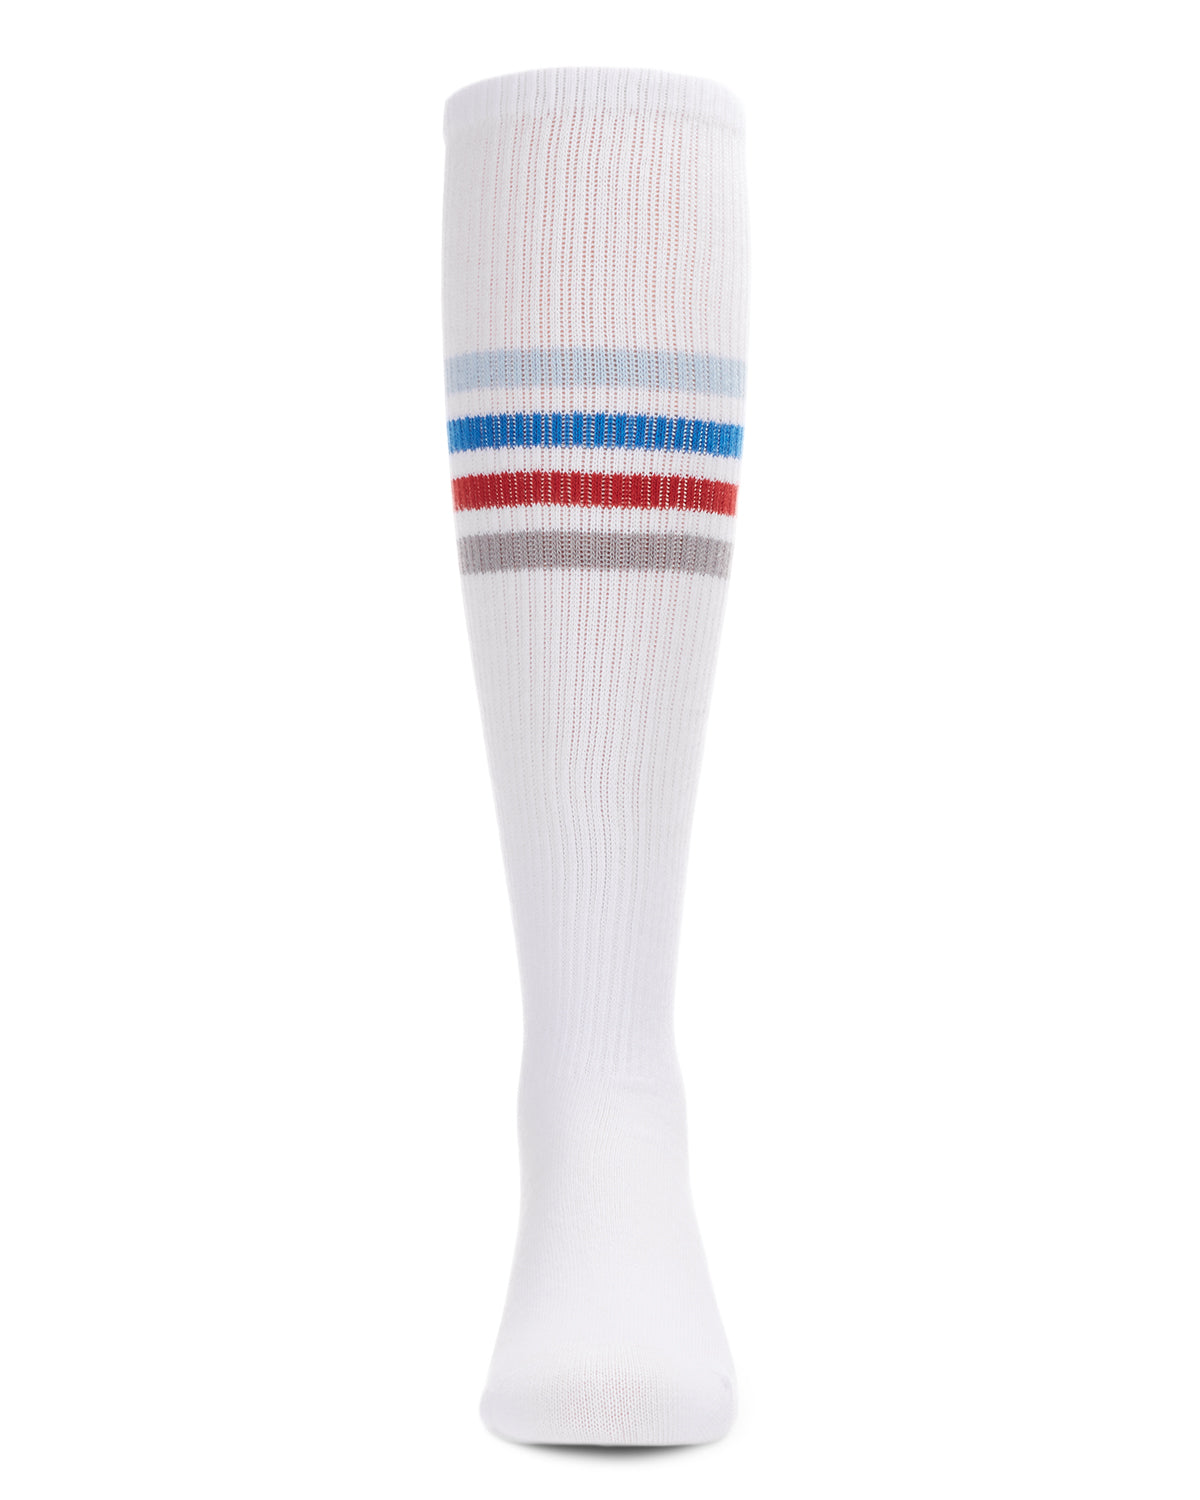 Thin Ribbed Athletic Stripe Cotton Blend Knee High Socks